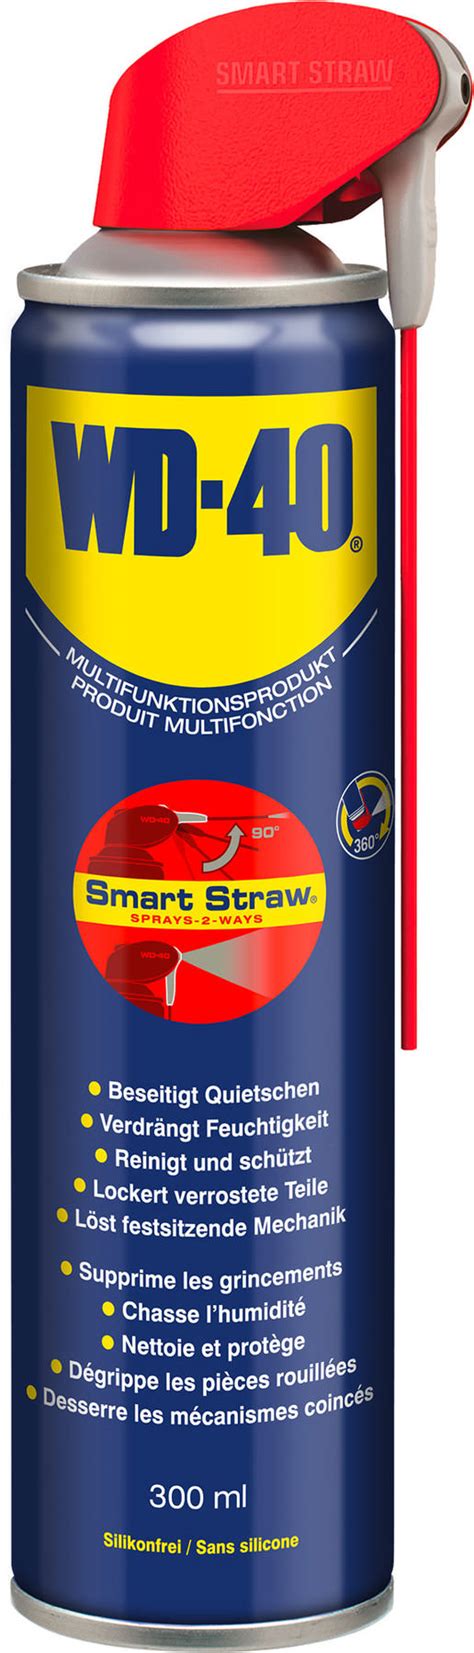 Wd 40 Wd 40 Multifunktions Produkt Smart Straw